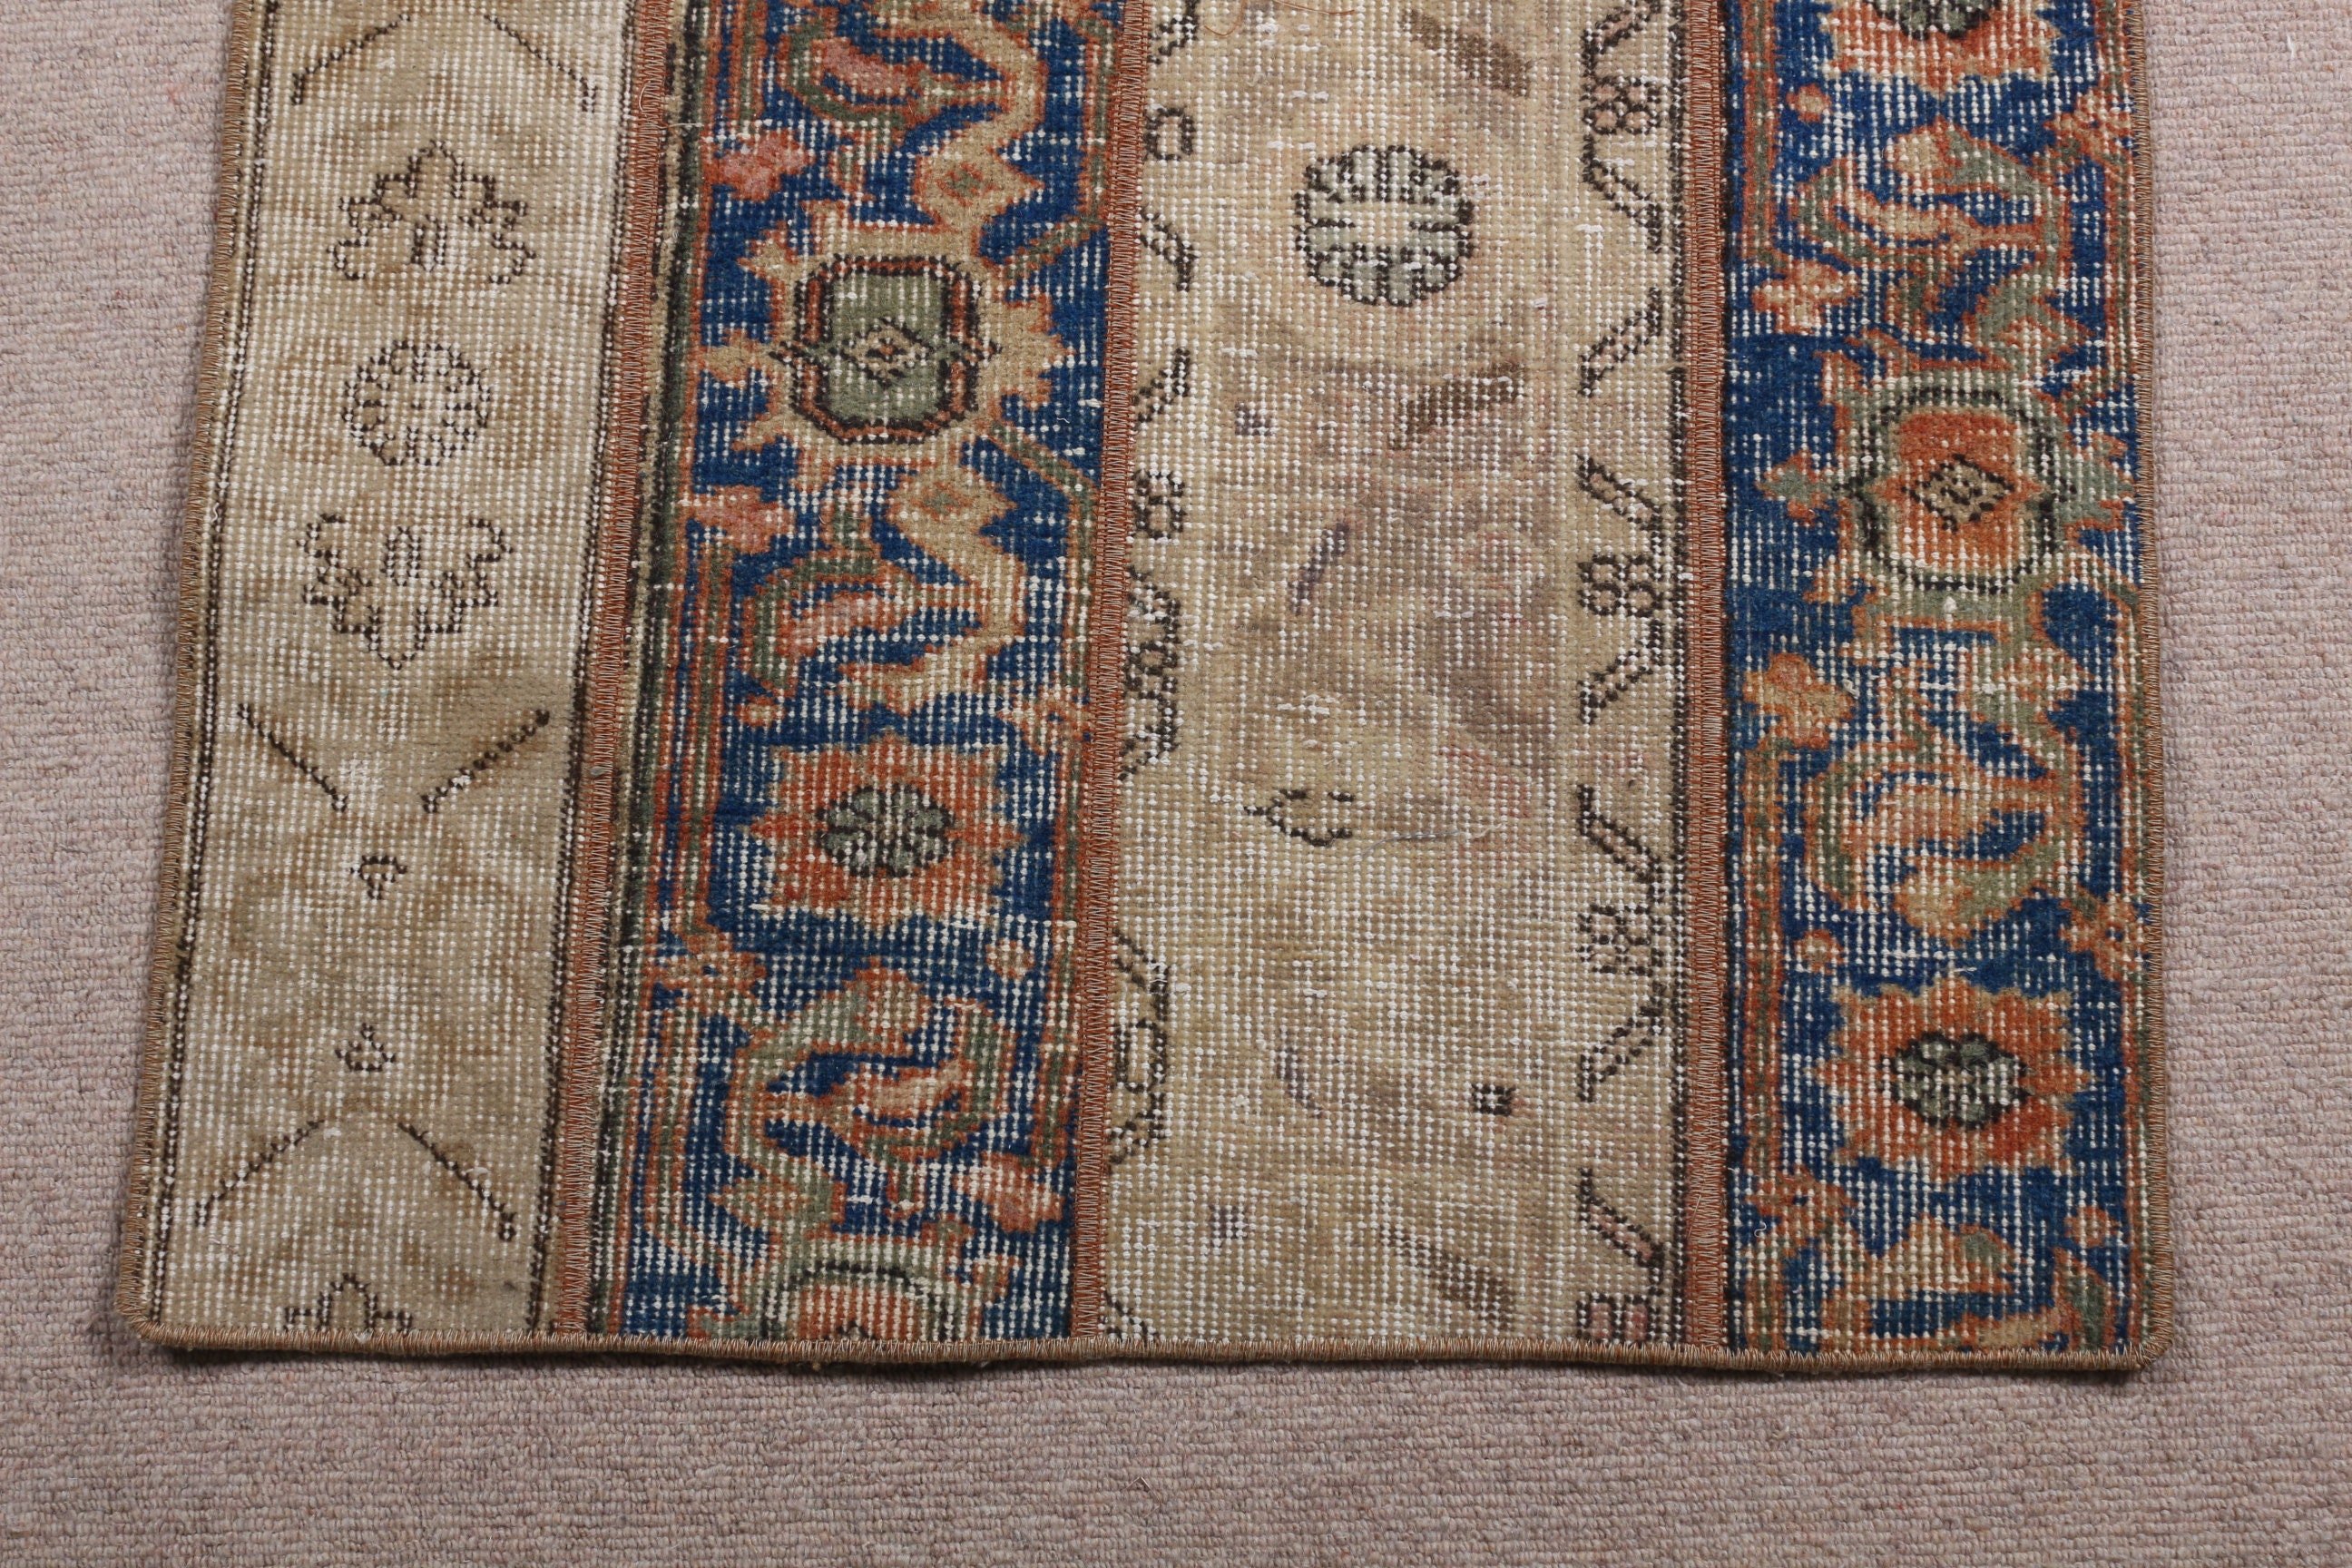 Floor Rugs, Vintage Rug, Beige Oriental Rug, Bedroom Rug, 2.3x4.1 ft Small Rug, Rugs for Entry, Cool Rug, Art Rug, Kitchen Rug, Turkish Rug